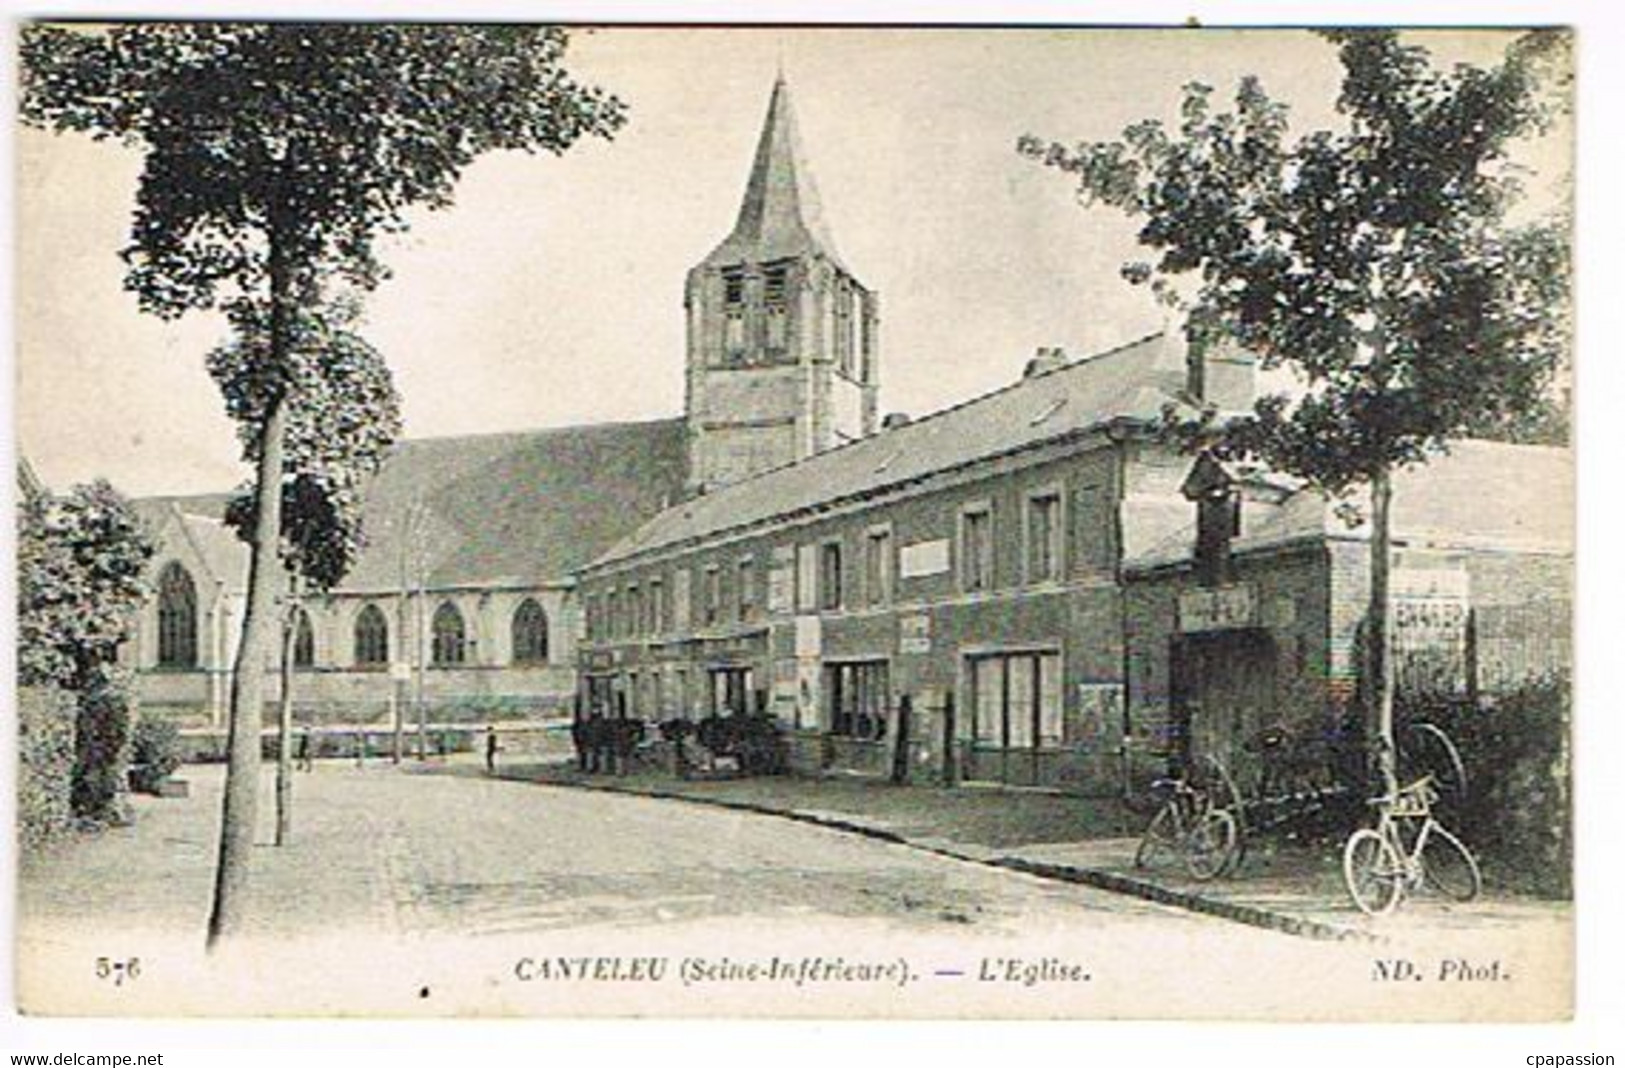 CANTELEU -  76 - L'Eglise - Bicyclettes - Edit ND Phot N° 576 - Canteleu